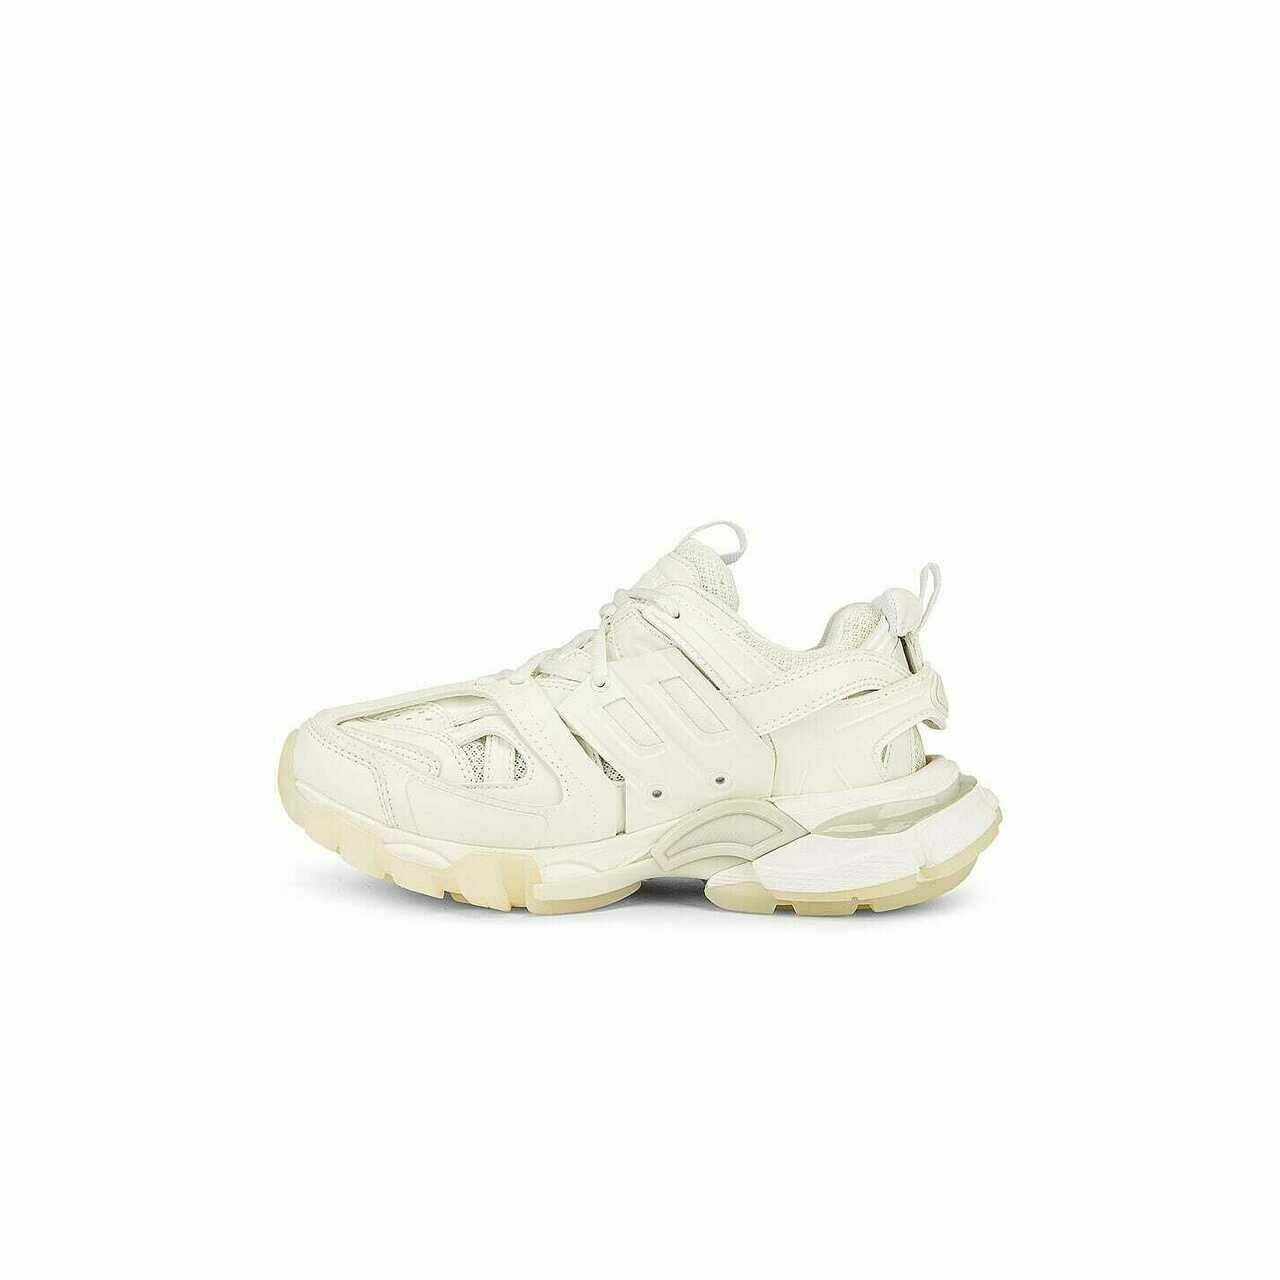 Balenciaga White Sneakers